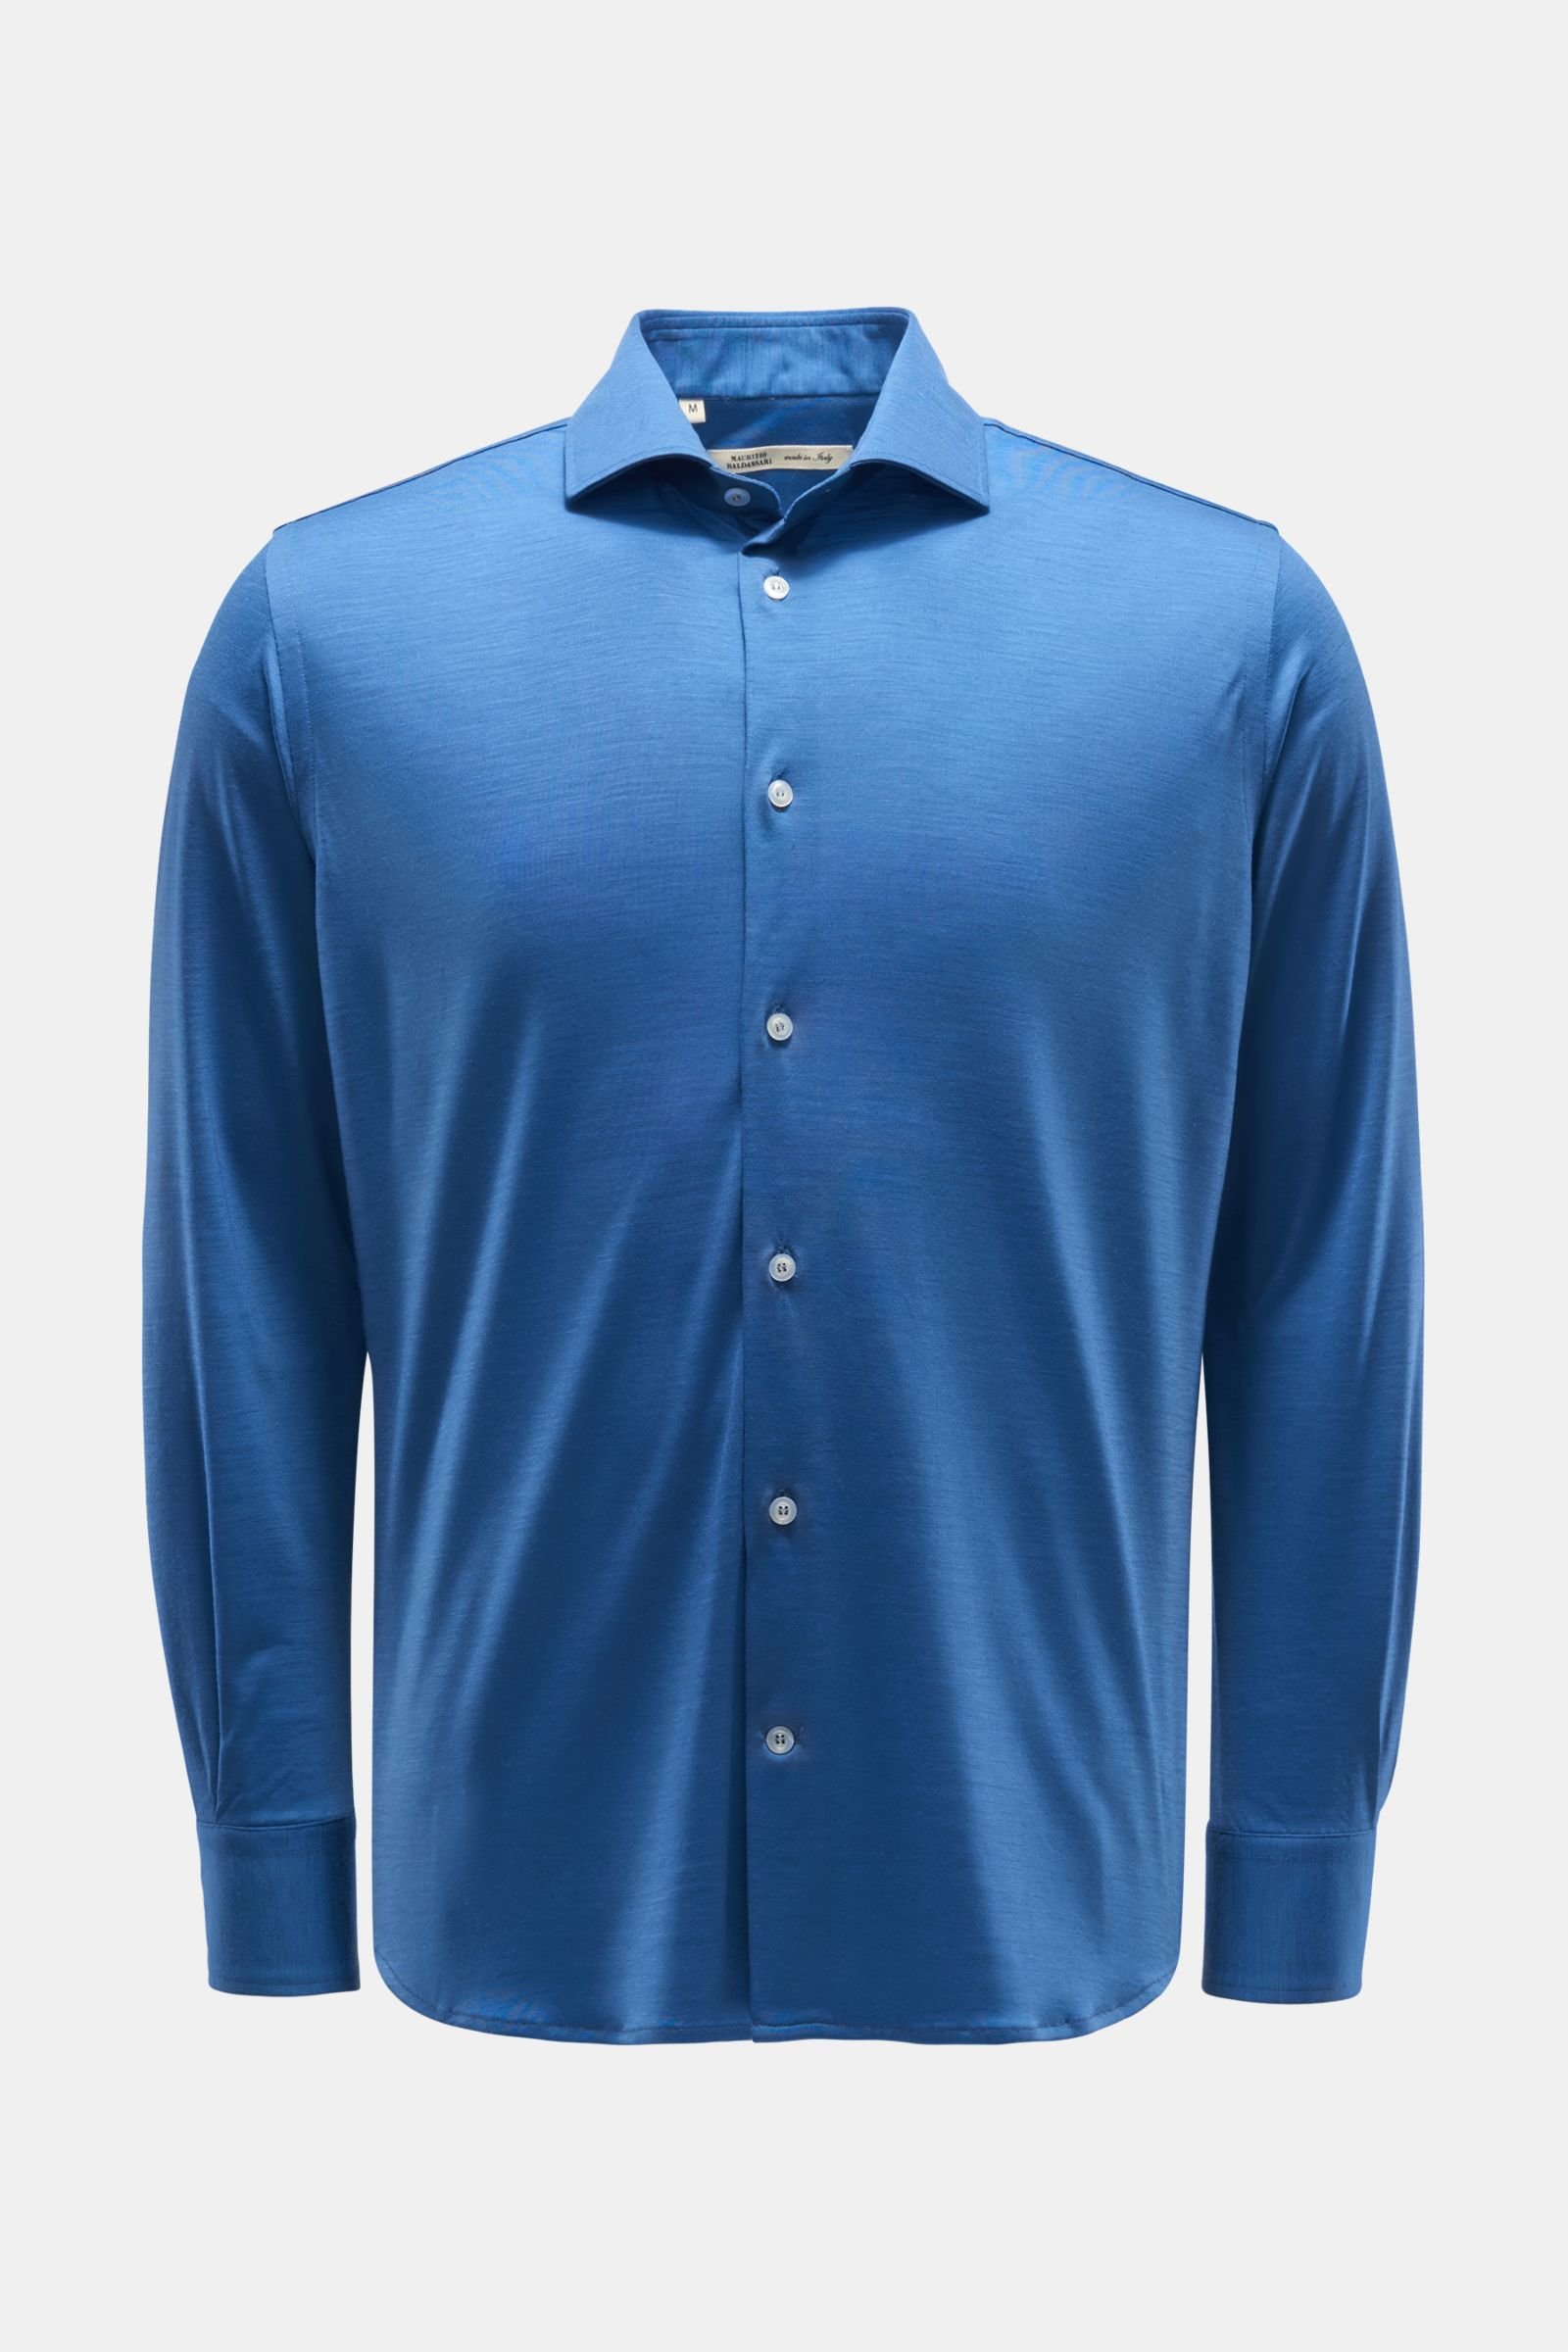 Jersey shirt slim collar blue